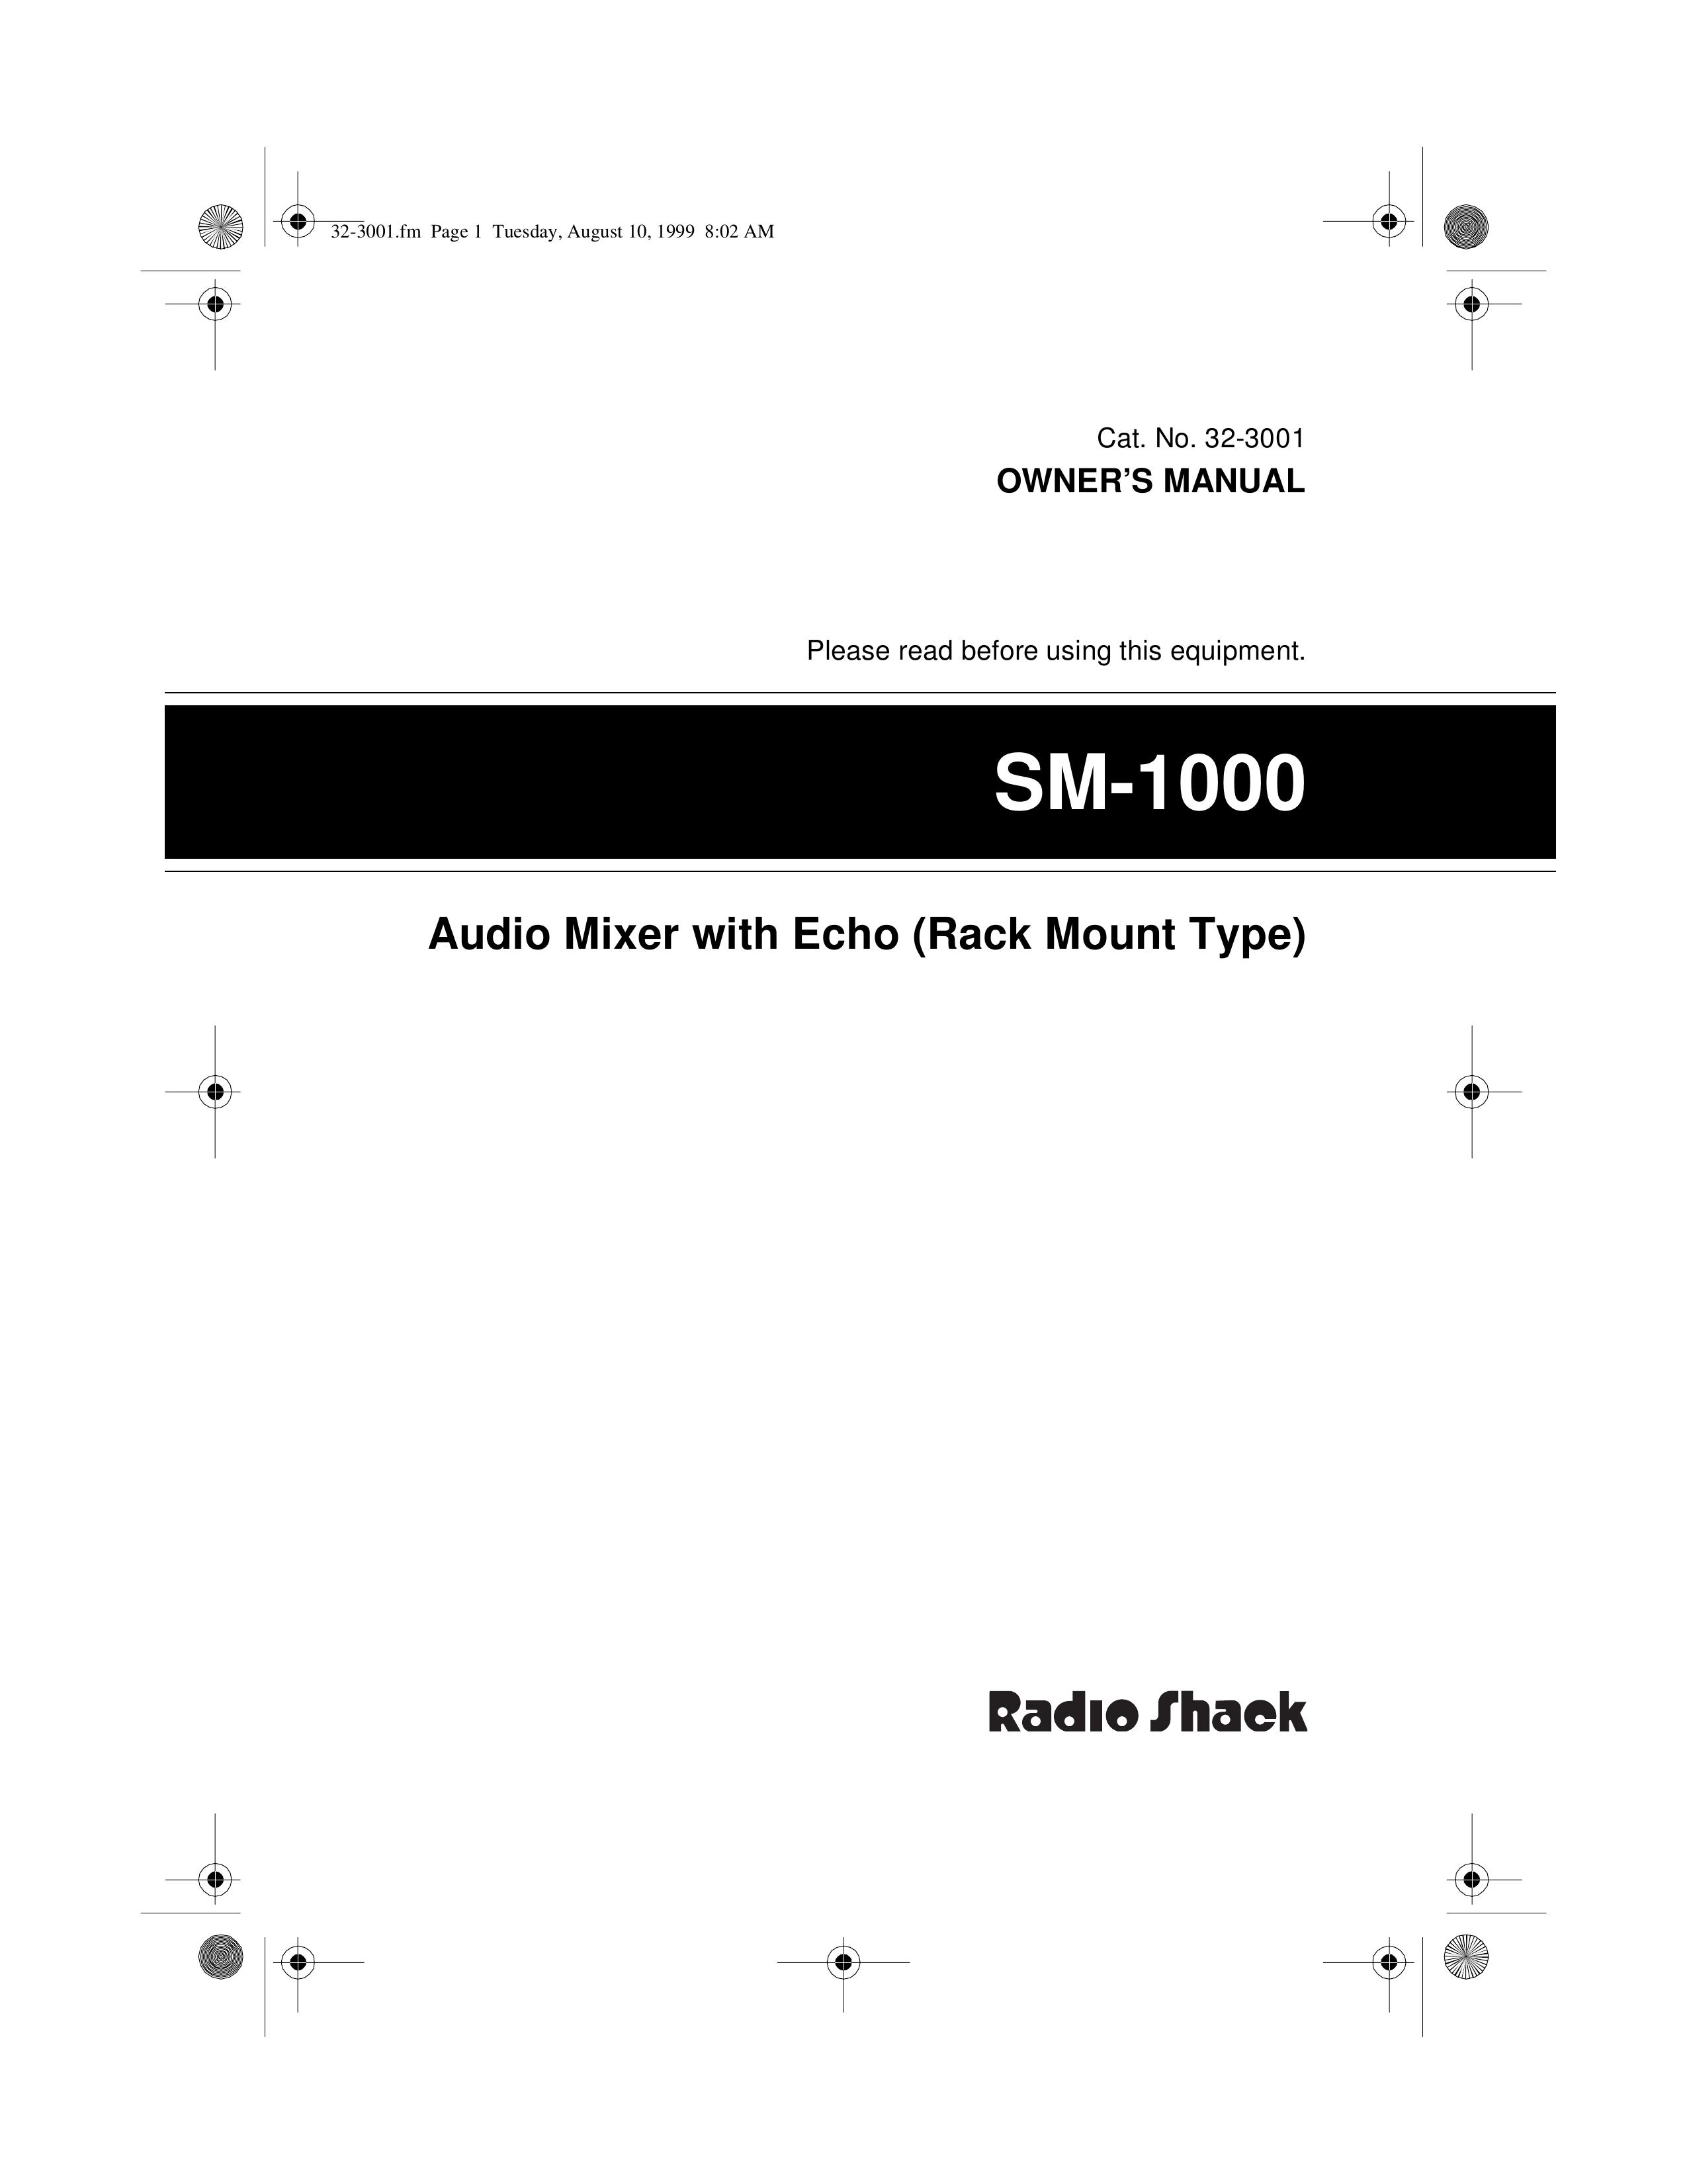 Radio Shack 32-3001 Music Mixer User Manual